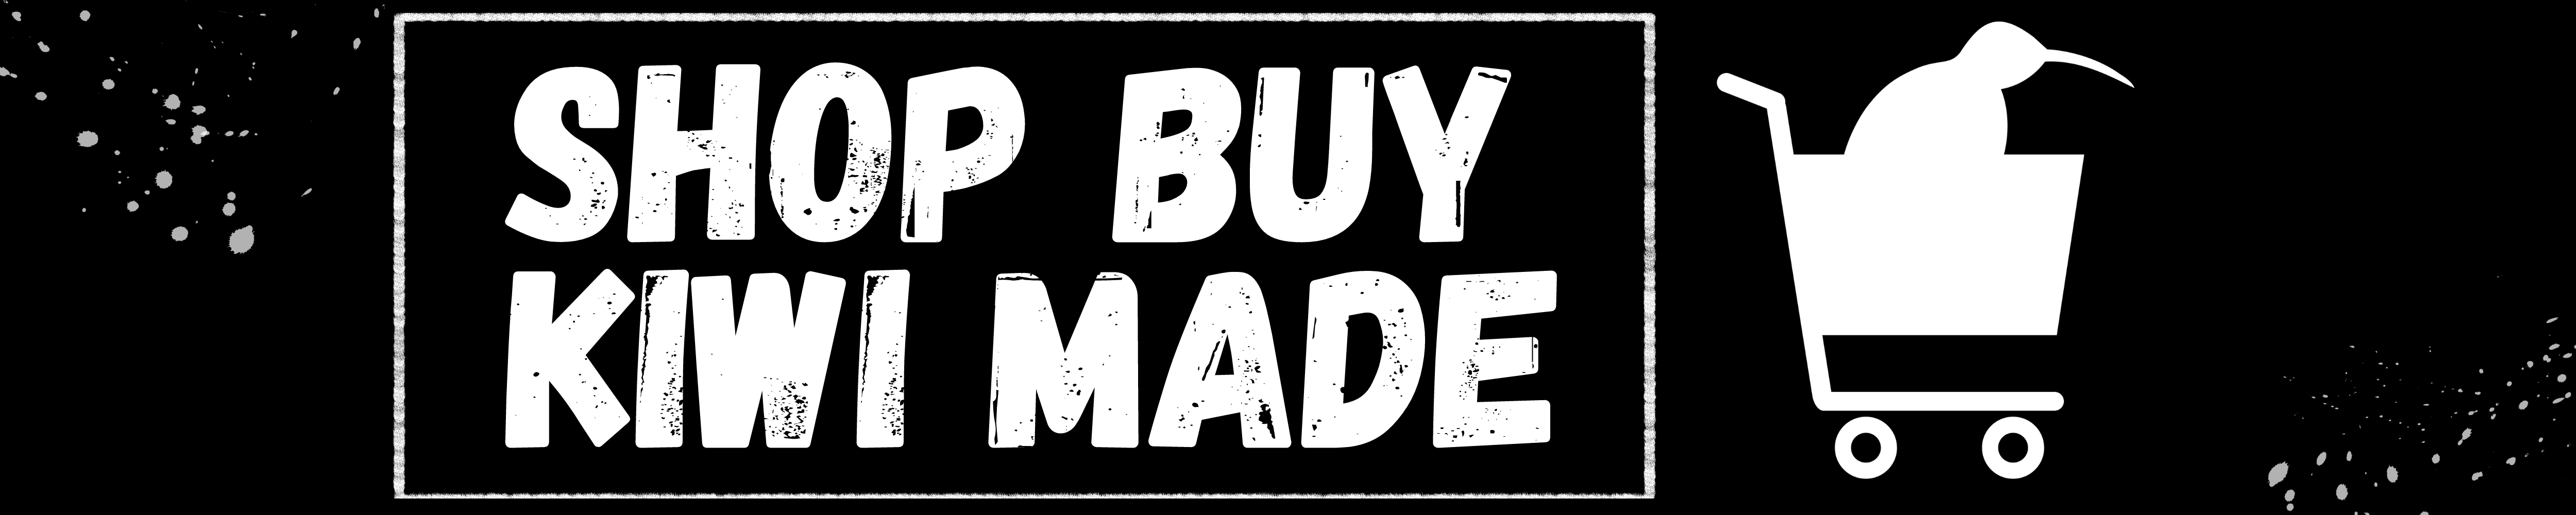 shop_Buy_kiwi_made_1